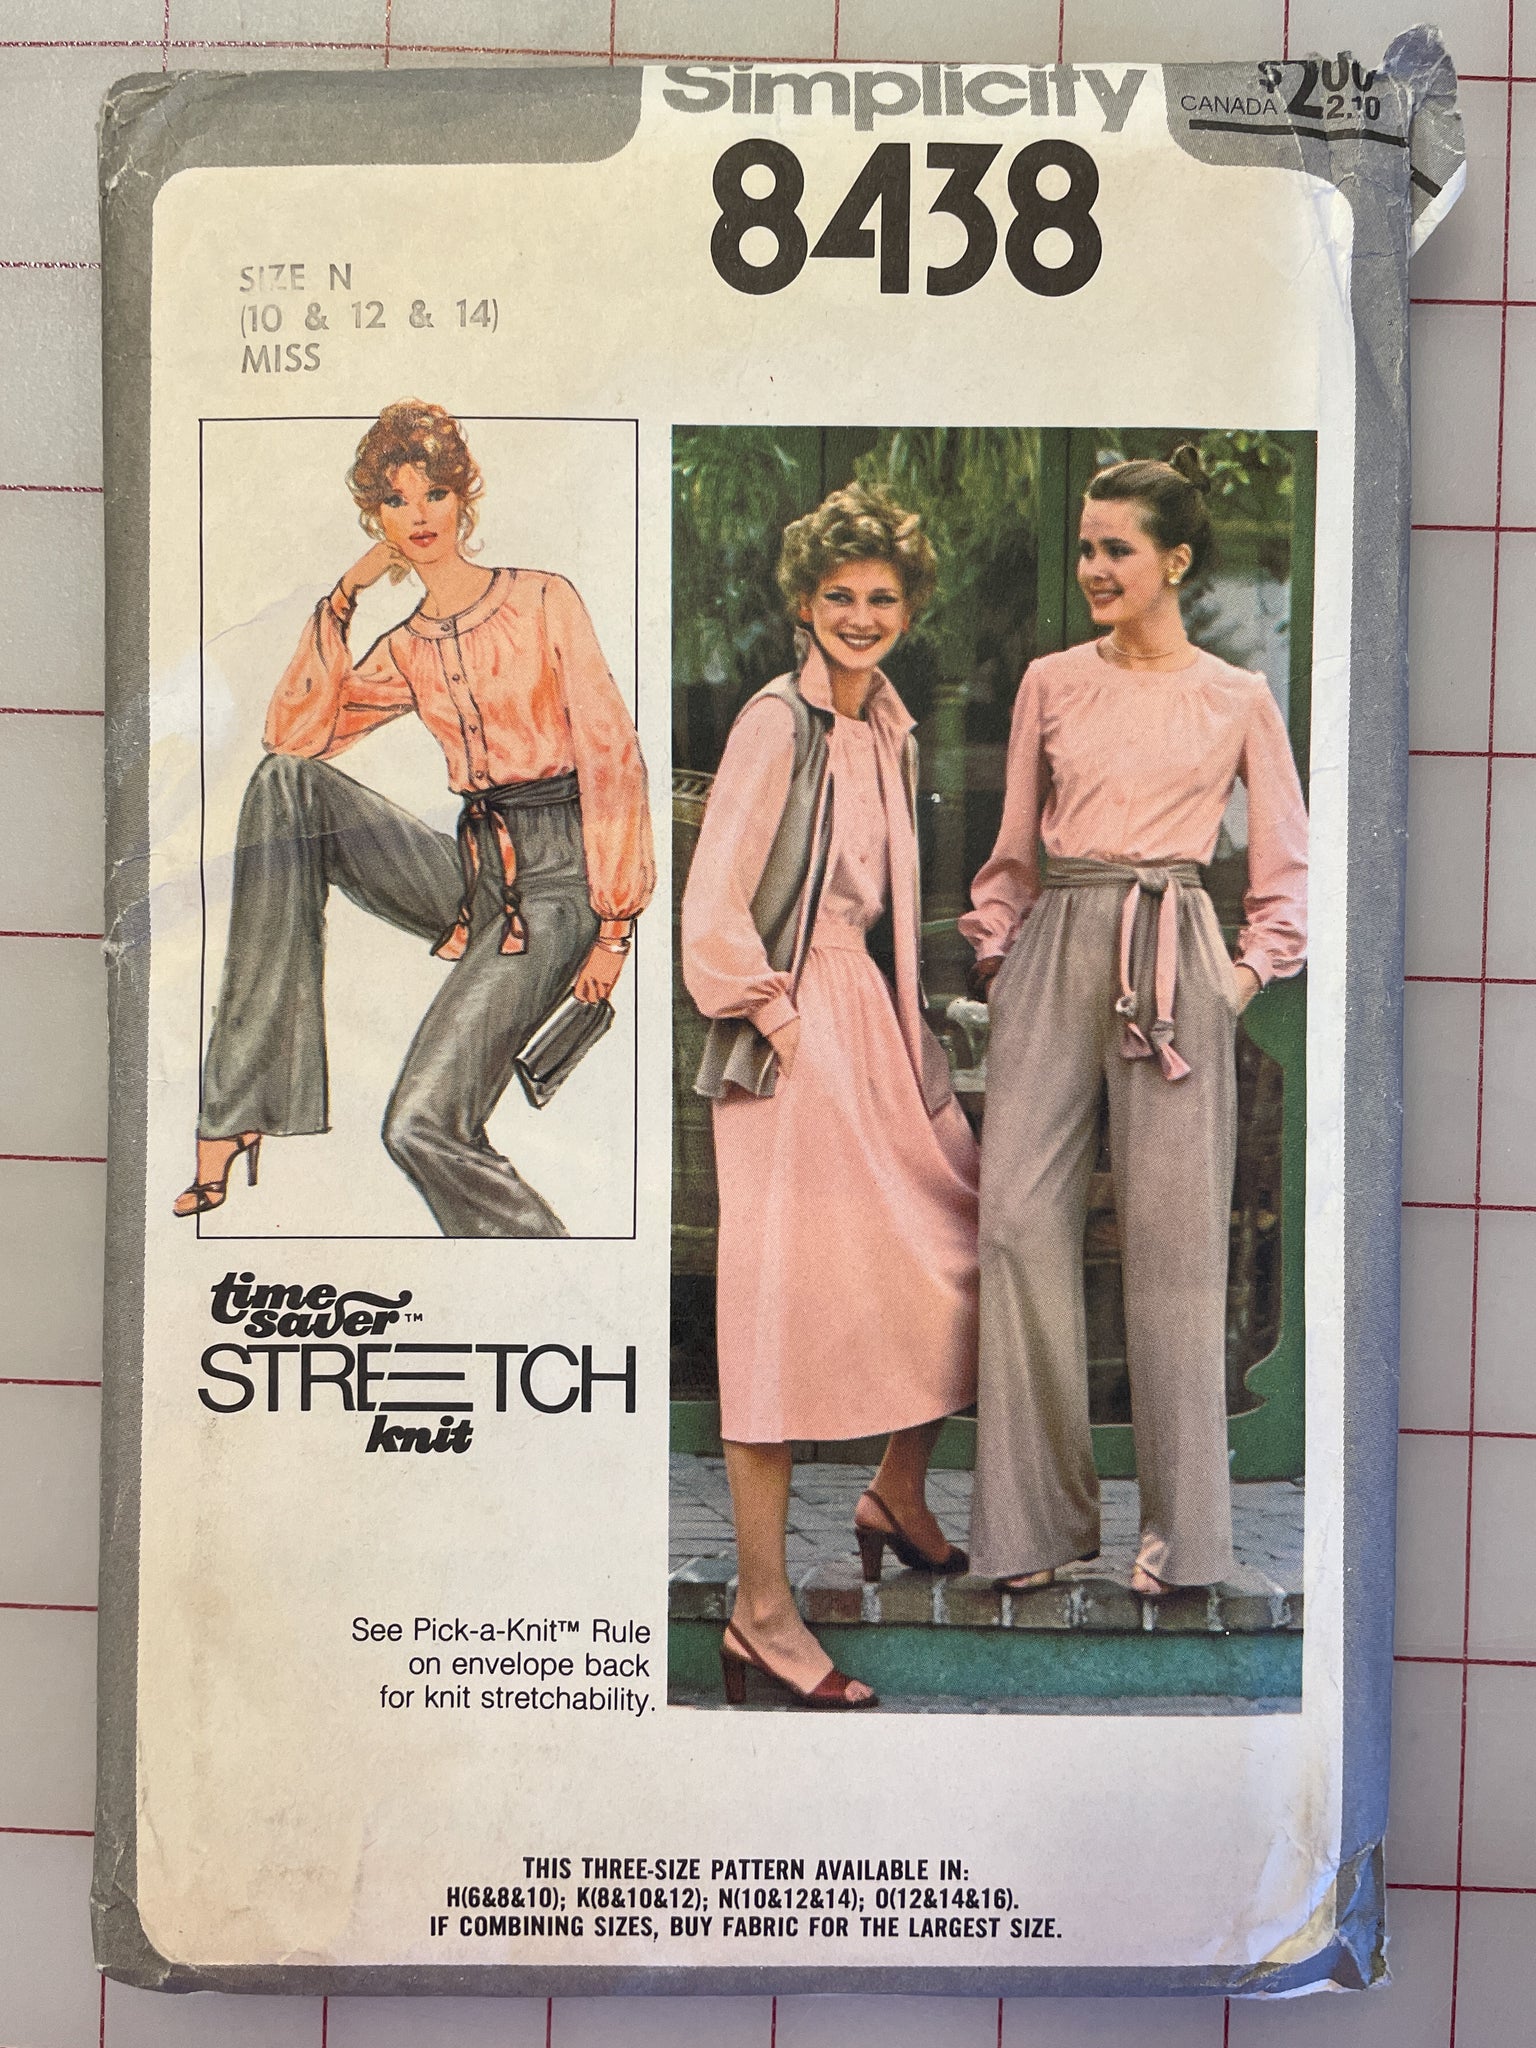 SALE 1978 Simplicity 8438 Pattern - Knit Blouse, Skirt, Pants, Reversible Vest and Sash